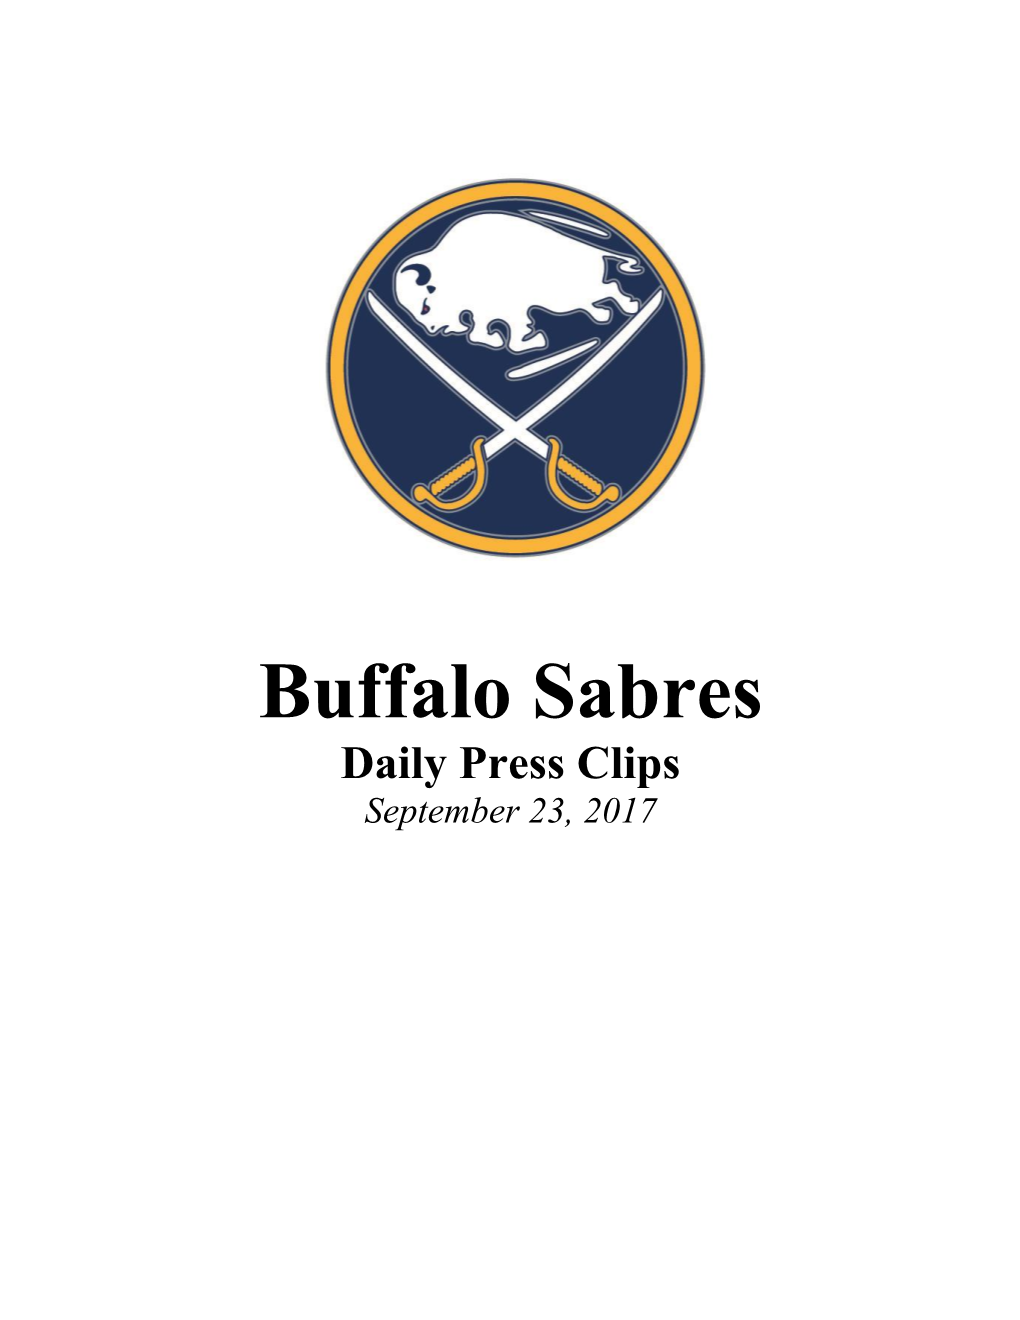 Buffalo Sabres Digital Press